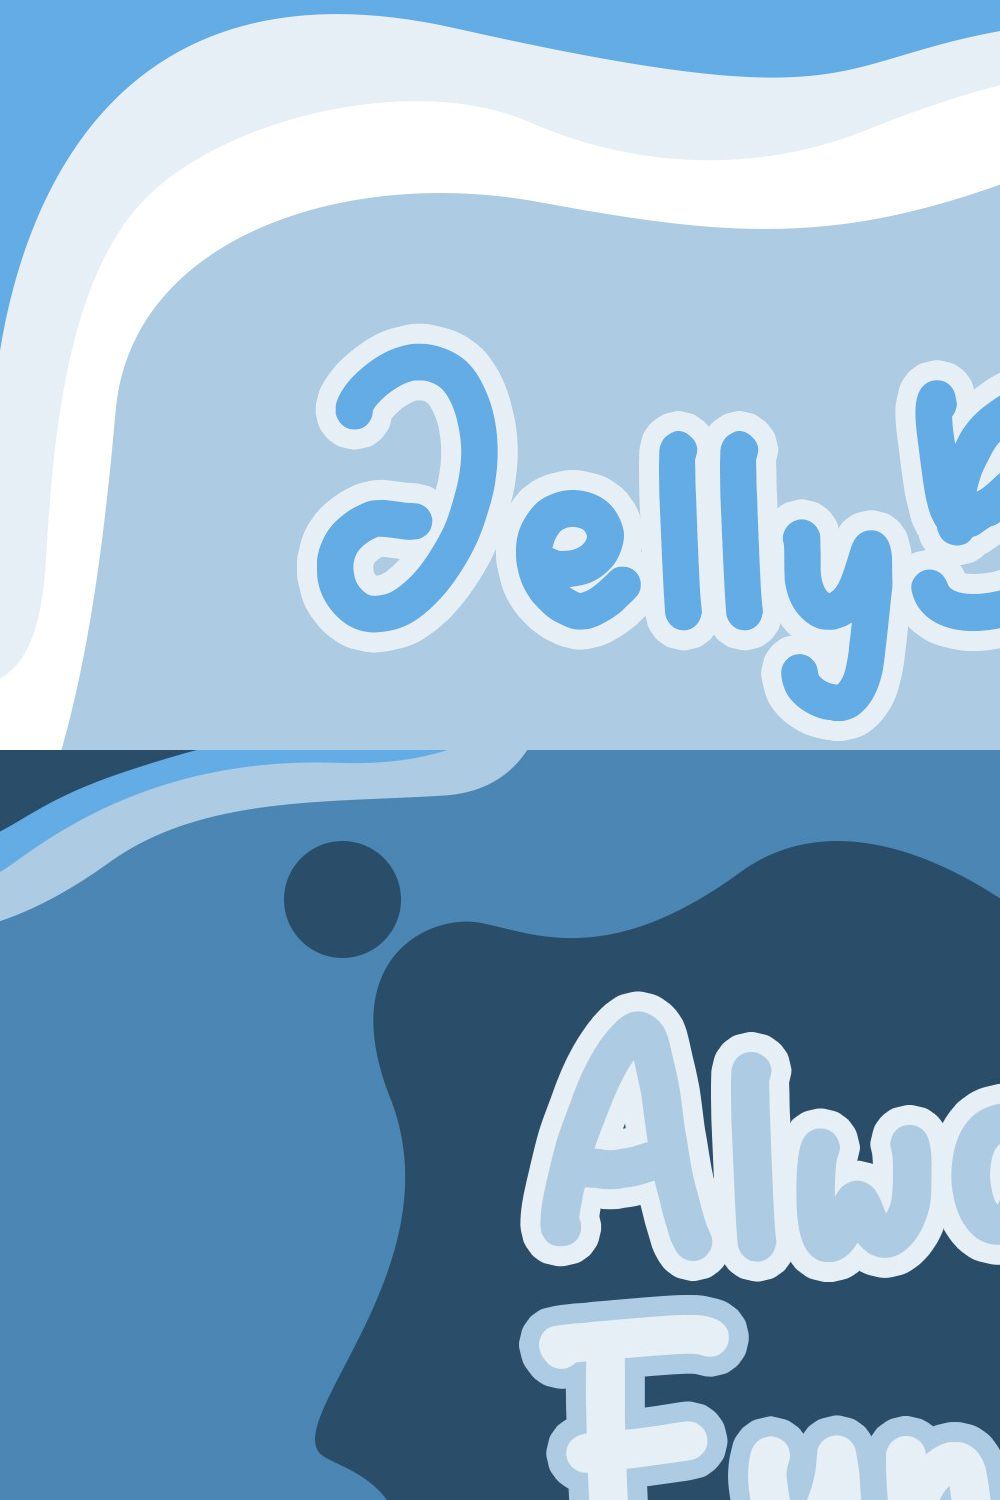 JellyBean || Cute & Playful Fonts pinterest preview image.